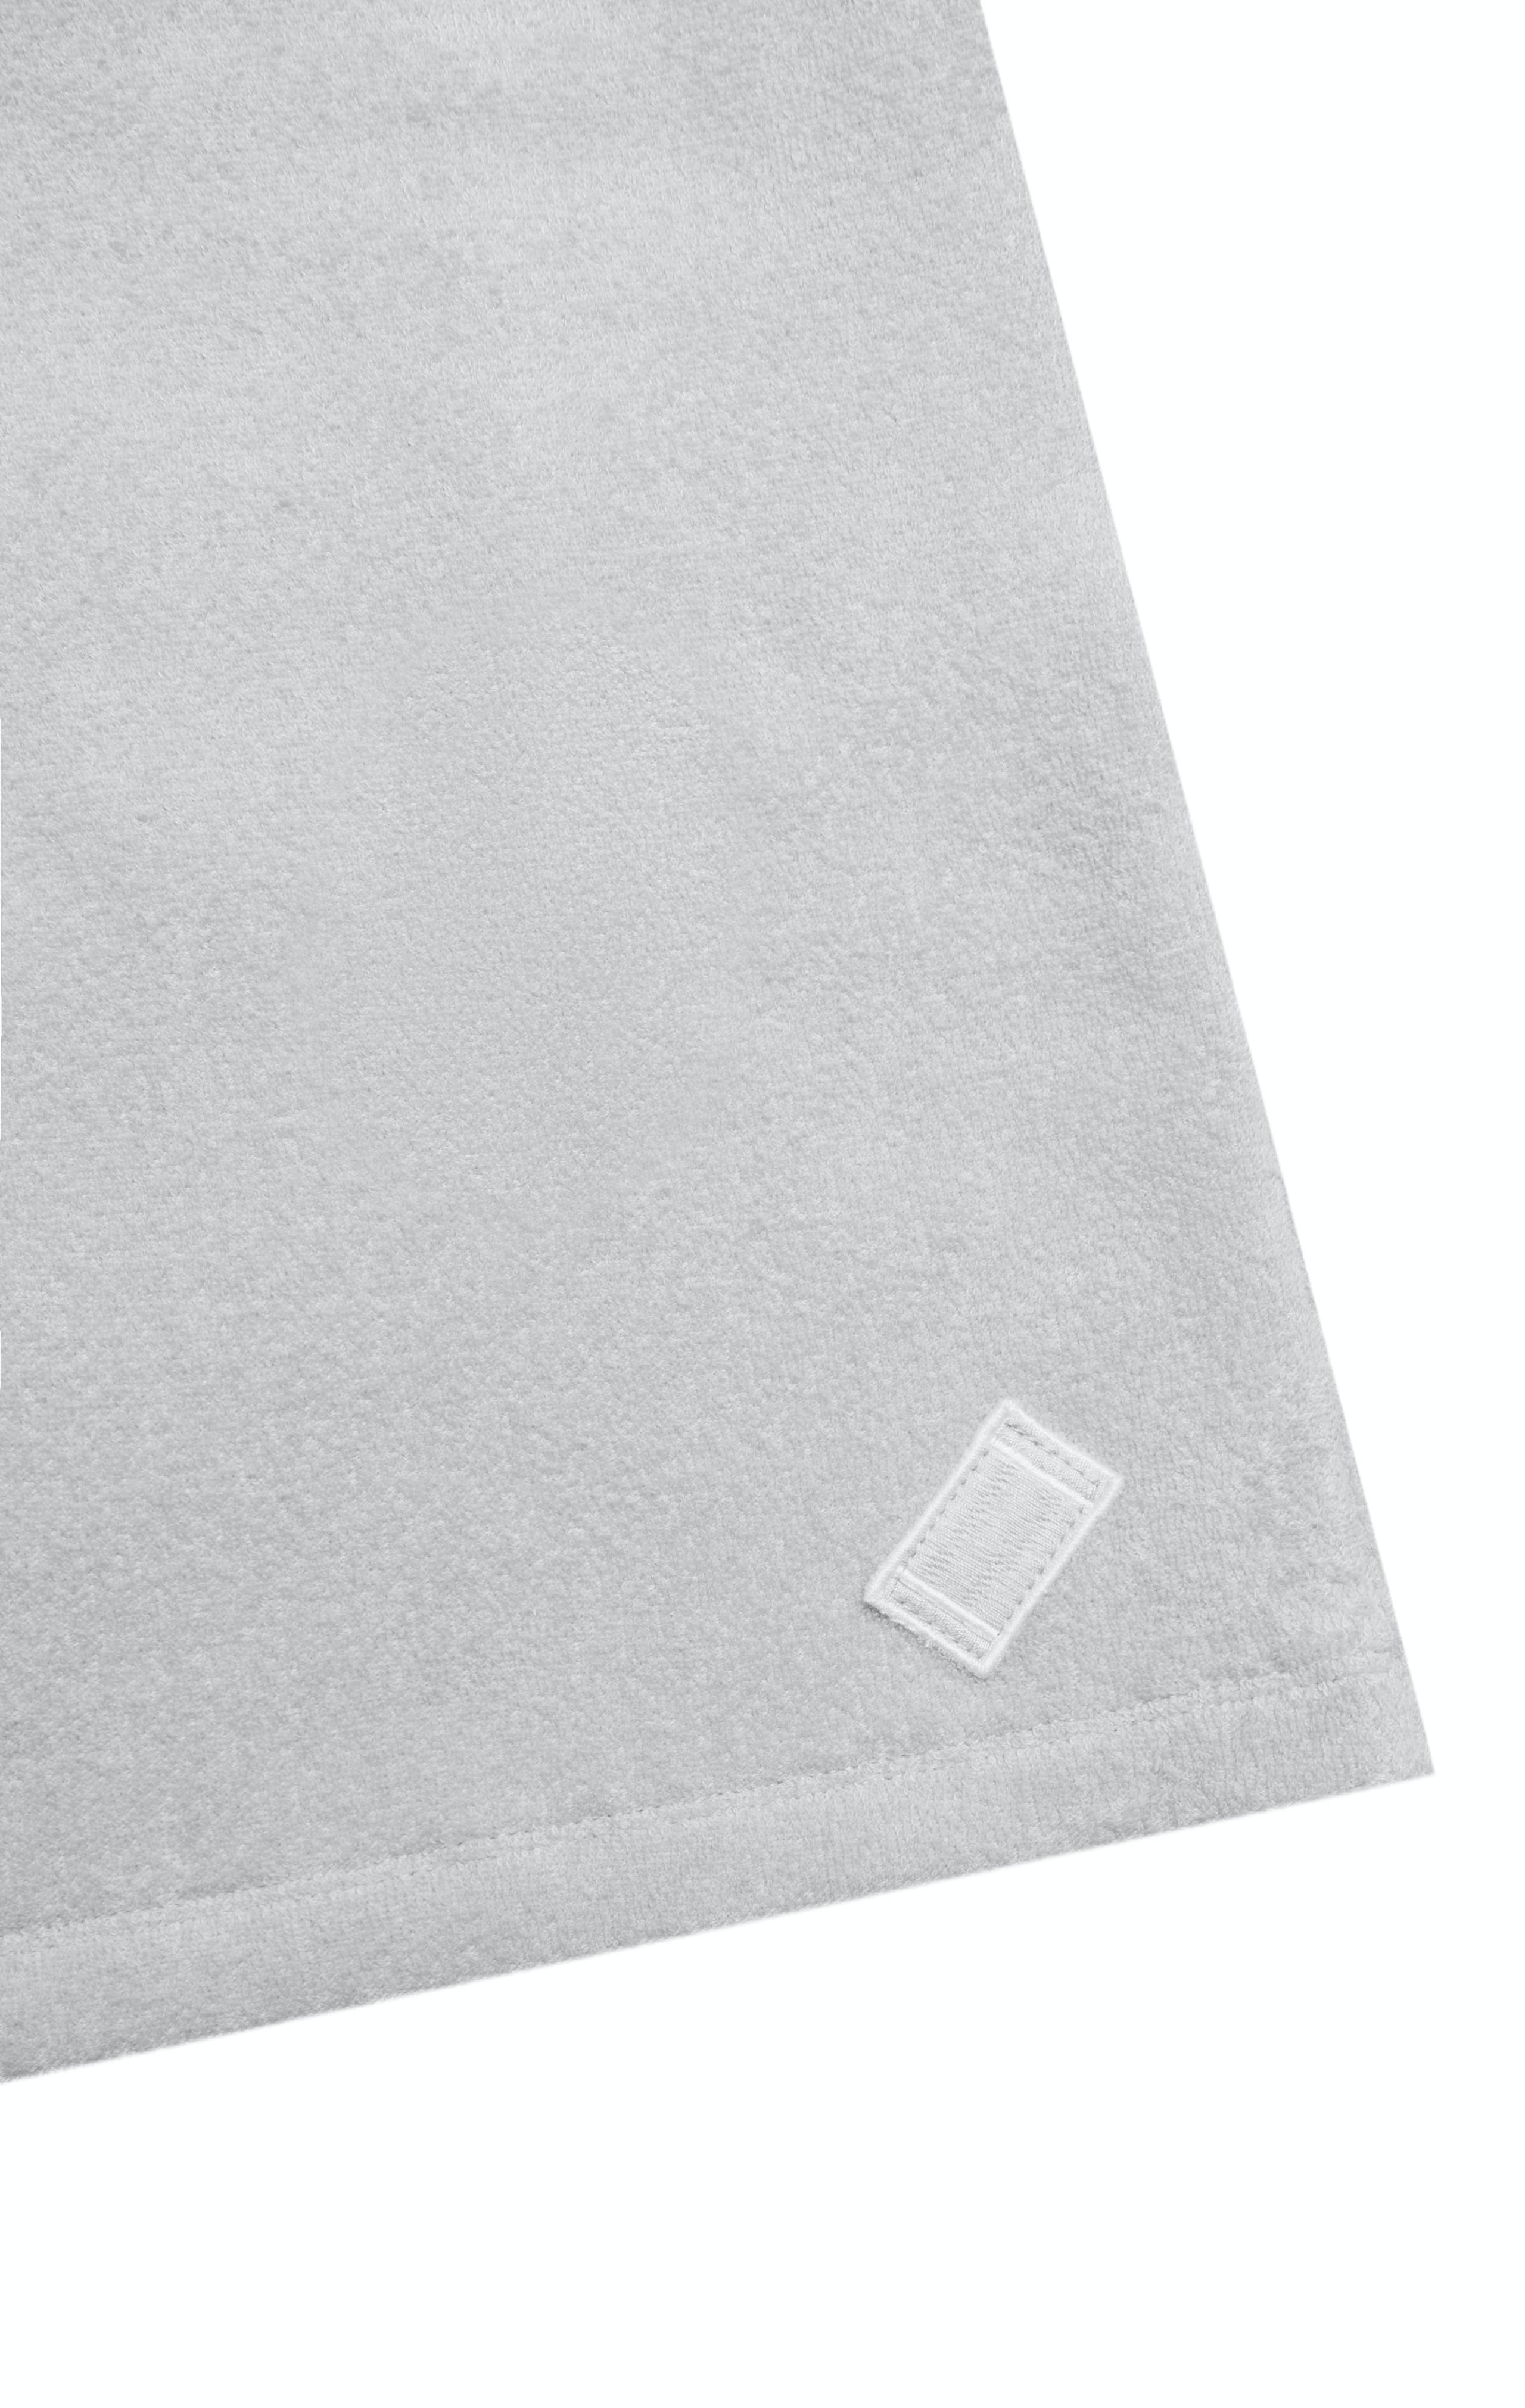 Onepiece Towel Club Shorts Light Grey - 3